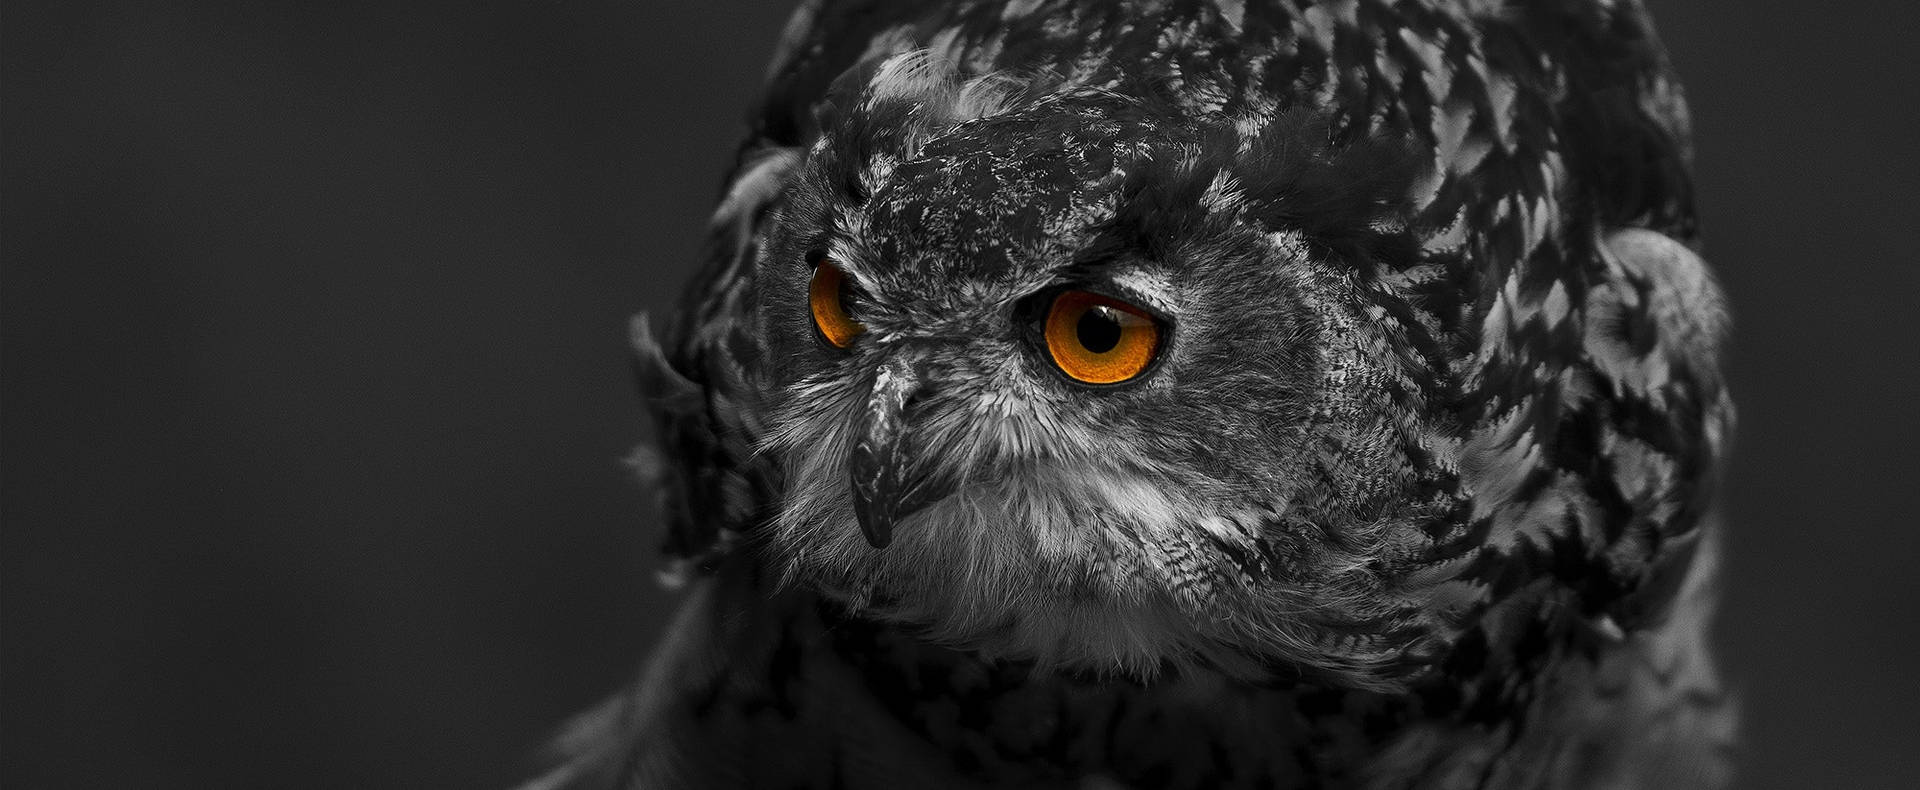 An Owl's Intent Gaze Amidst A Swirl Of Darkness Background